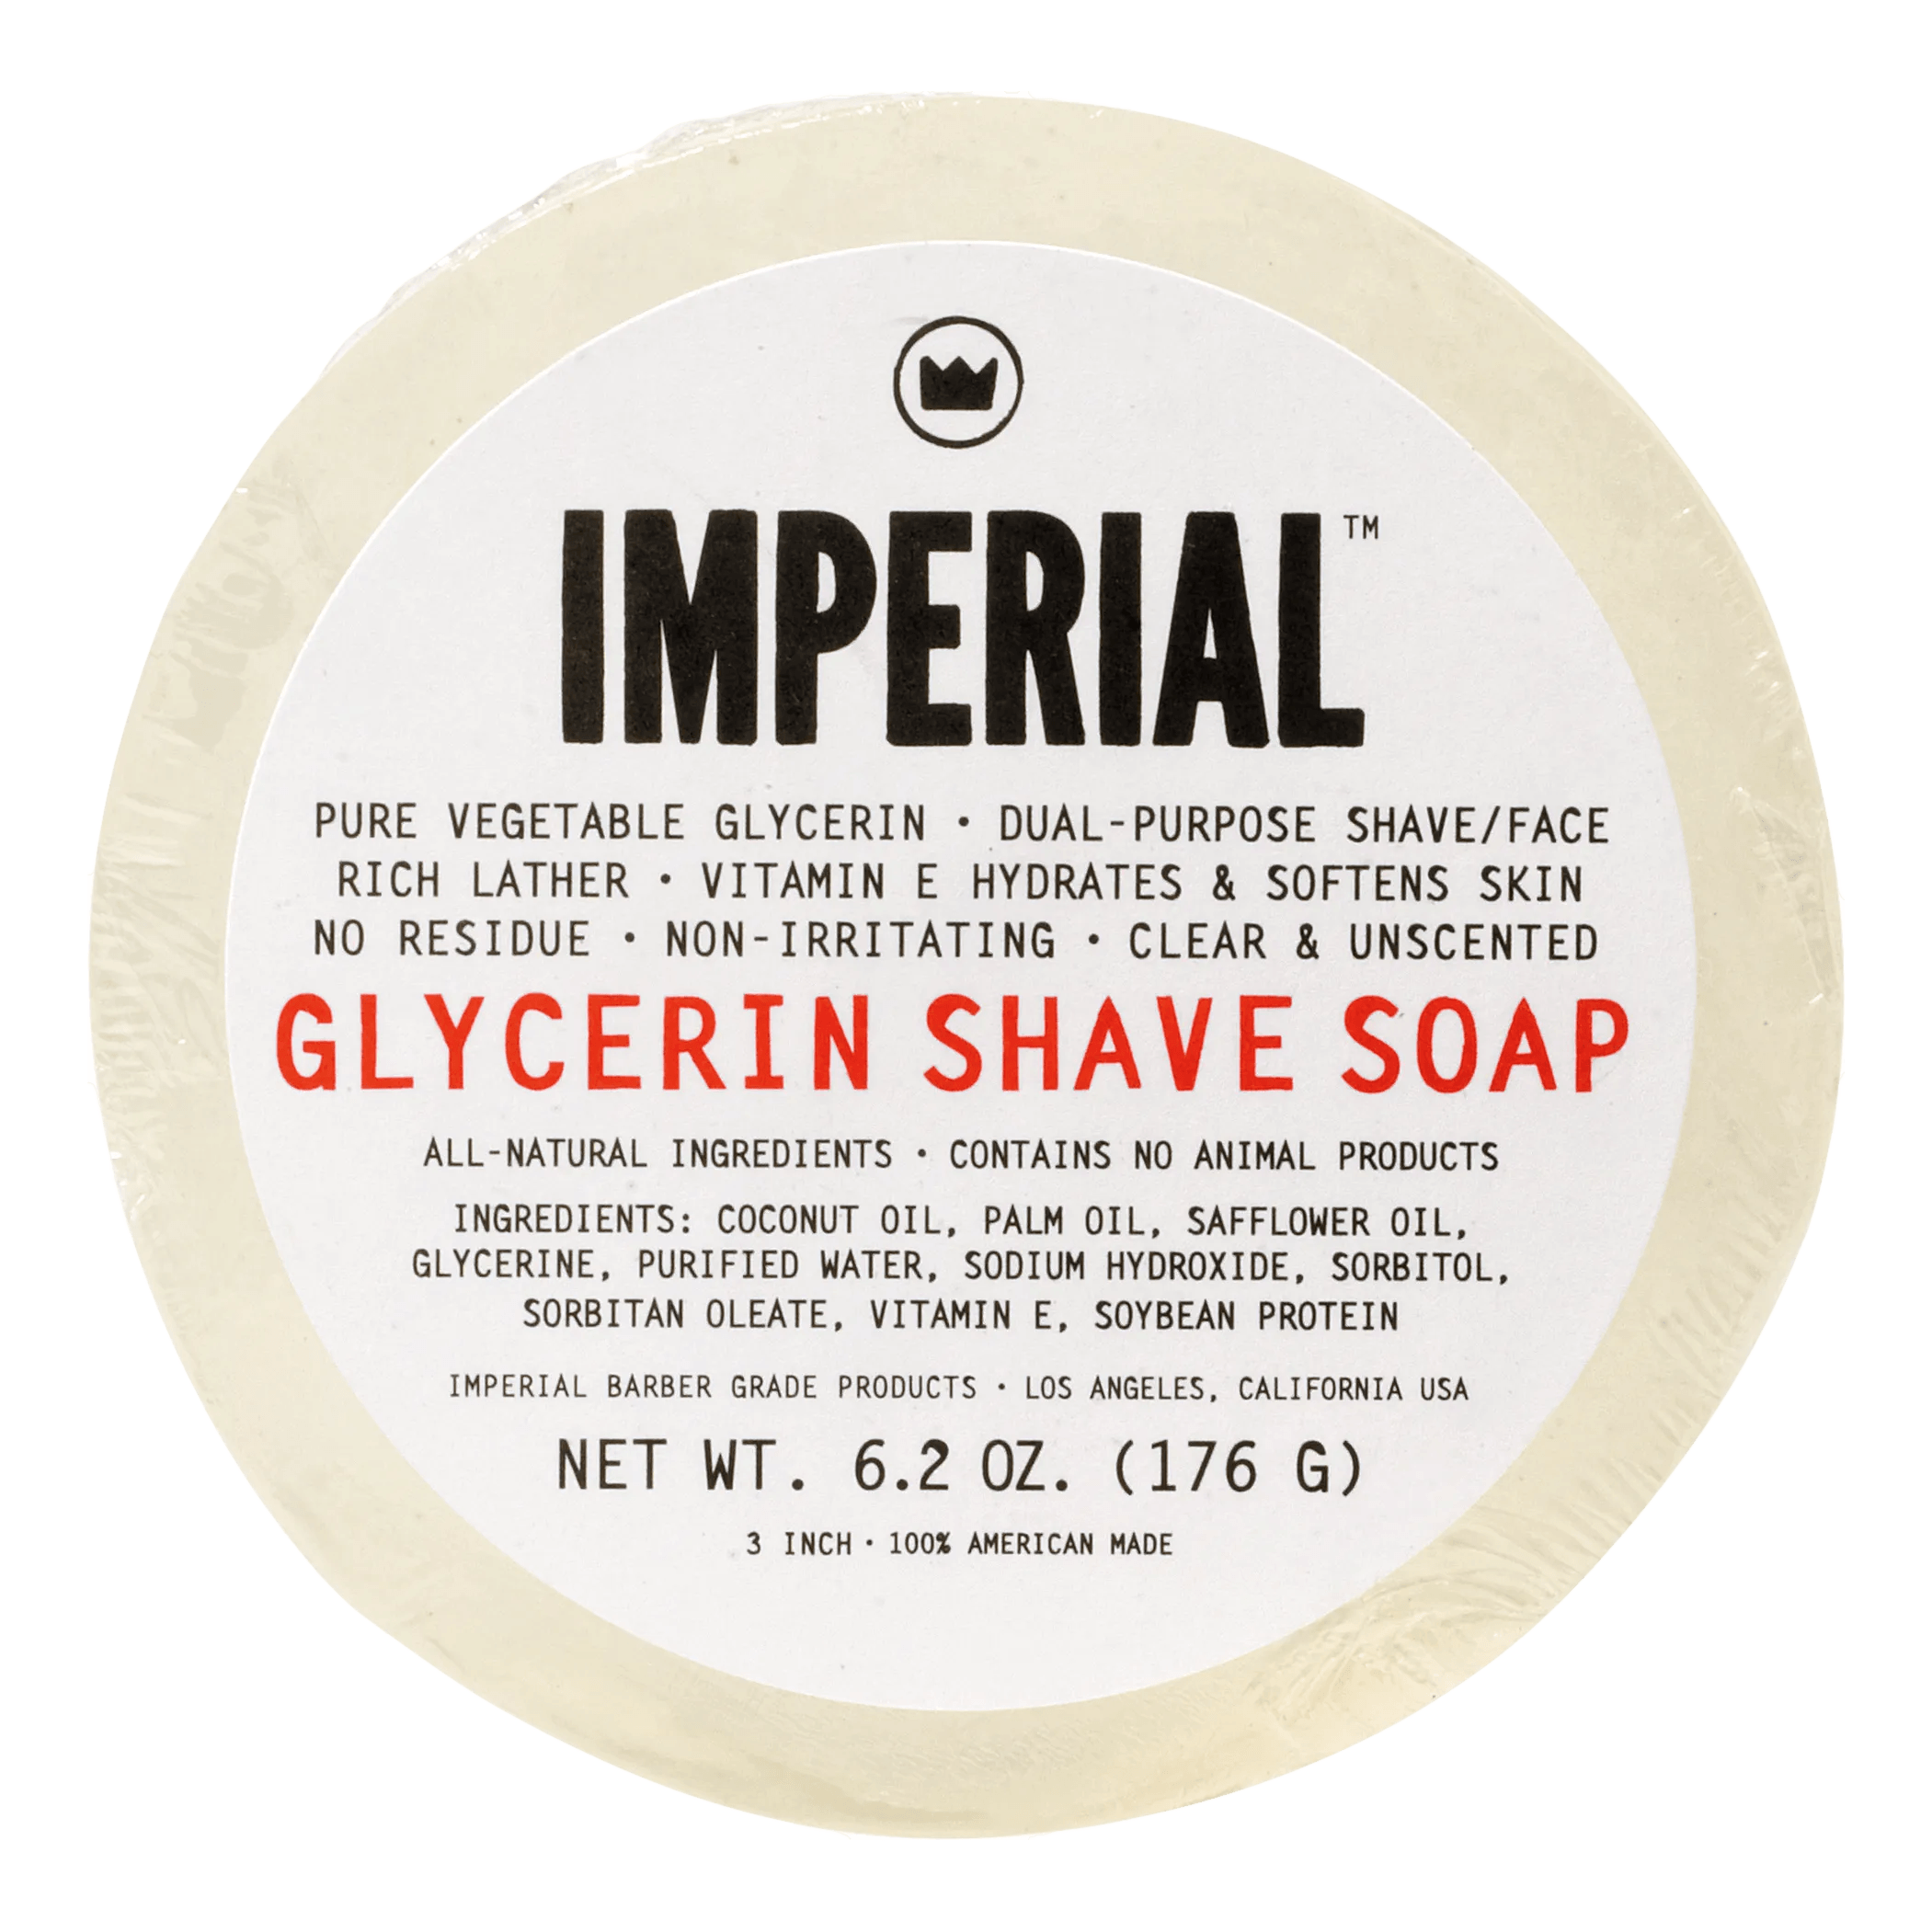 Imperial Barber Products barbersåpe i reiseskål